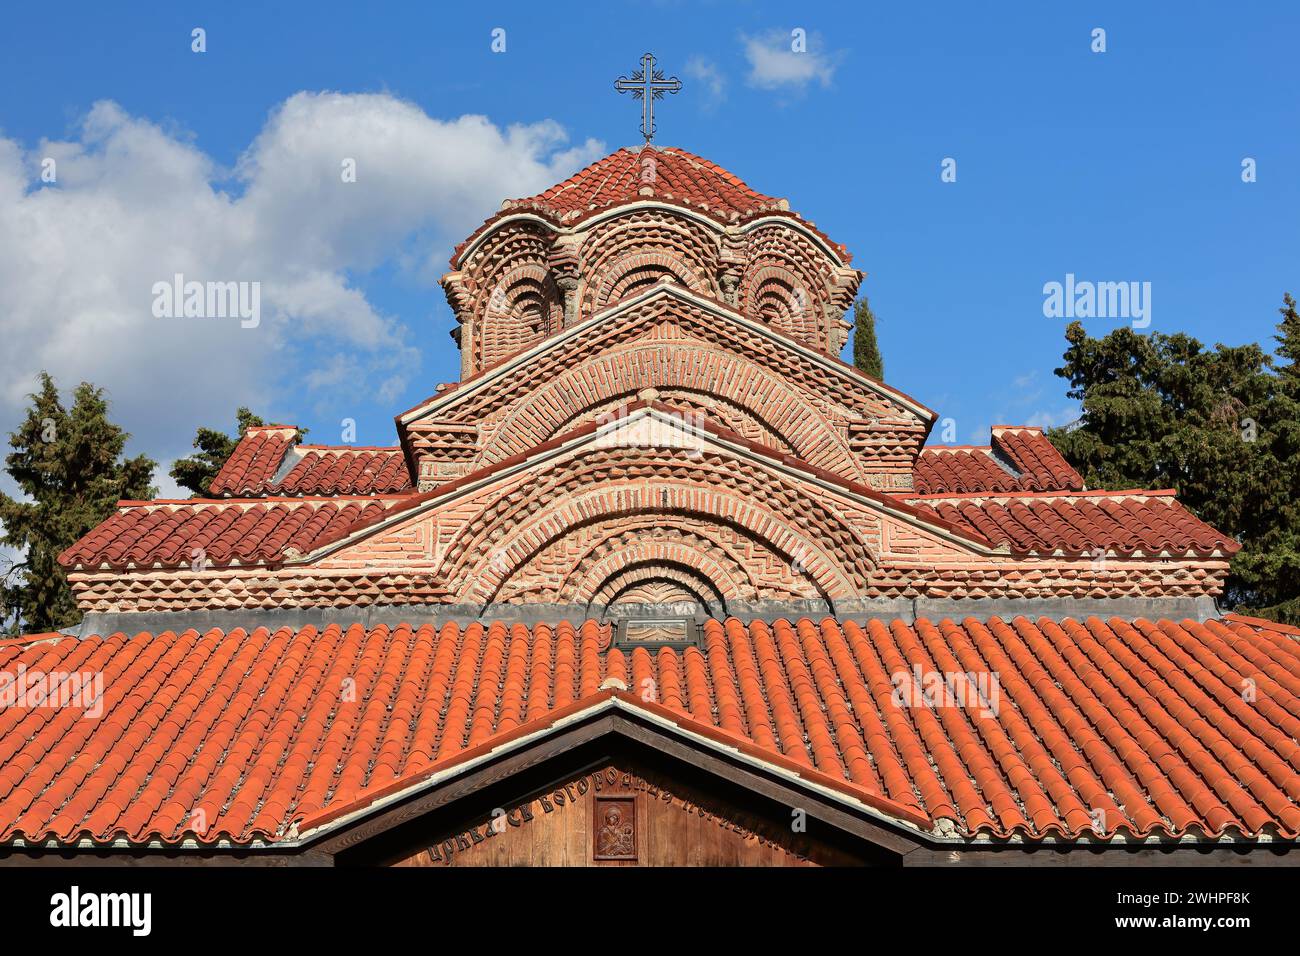 322 vue de face inclinée des toits, église mère de Dieu Perivleptos -Crkva Presveta Bogorodica- datant de AD 1295. Ohrid-Macédoine du Nord. Banque D'Images